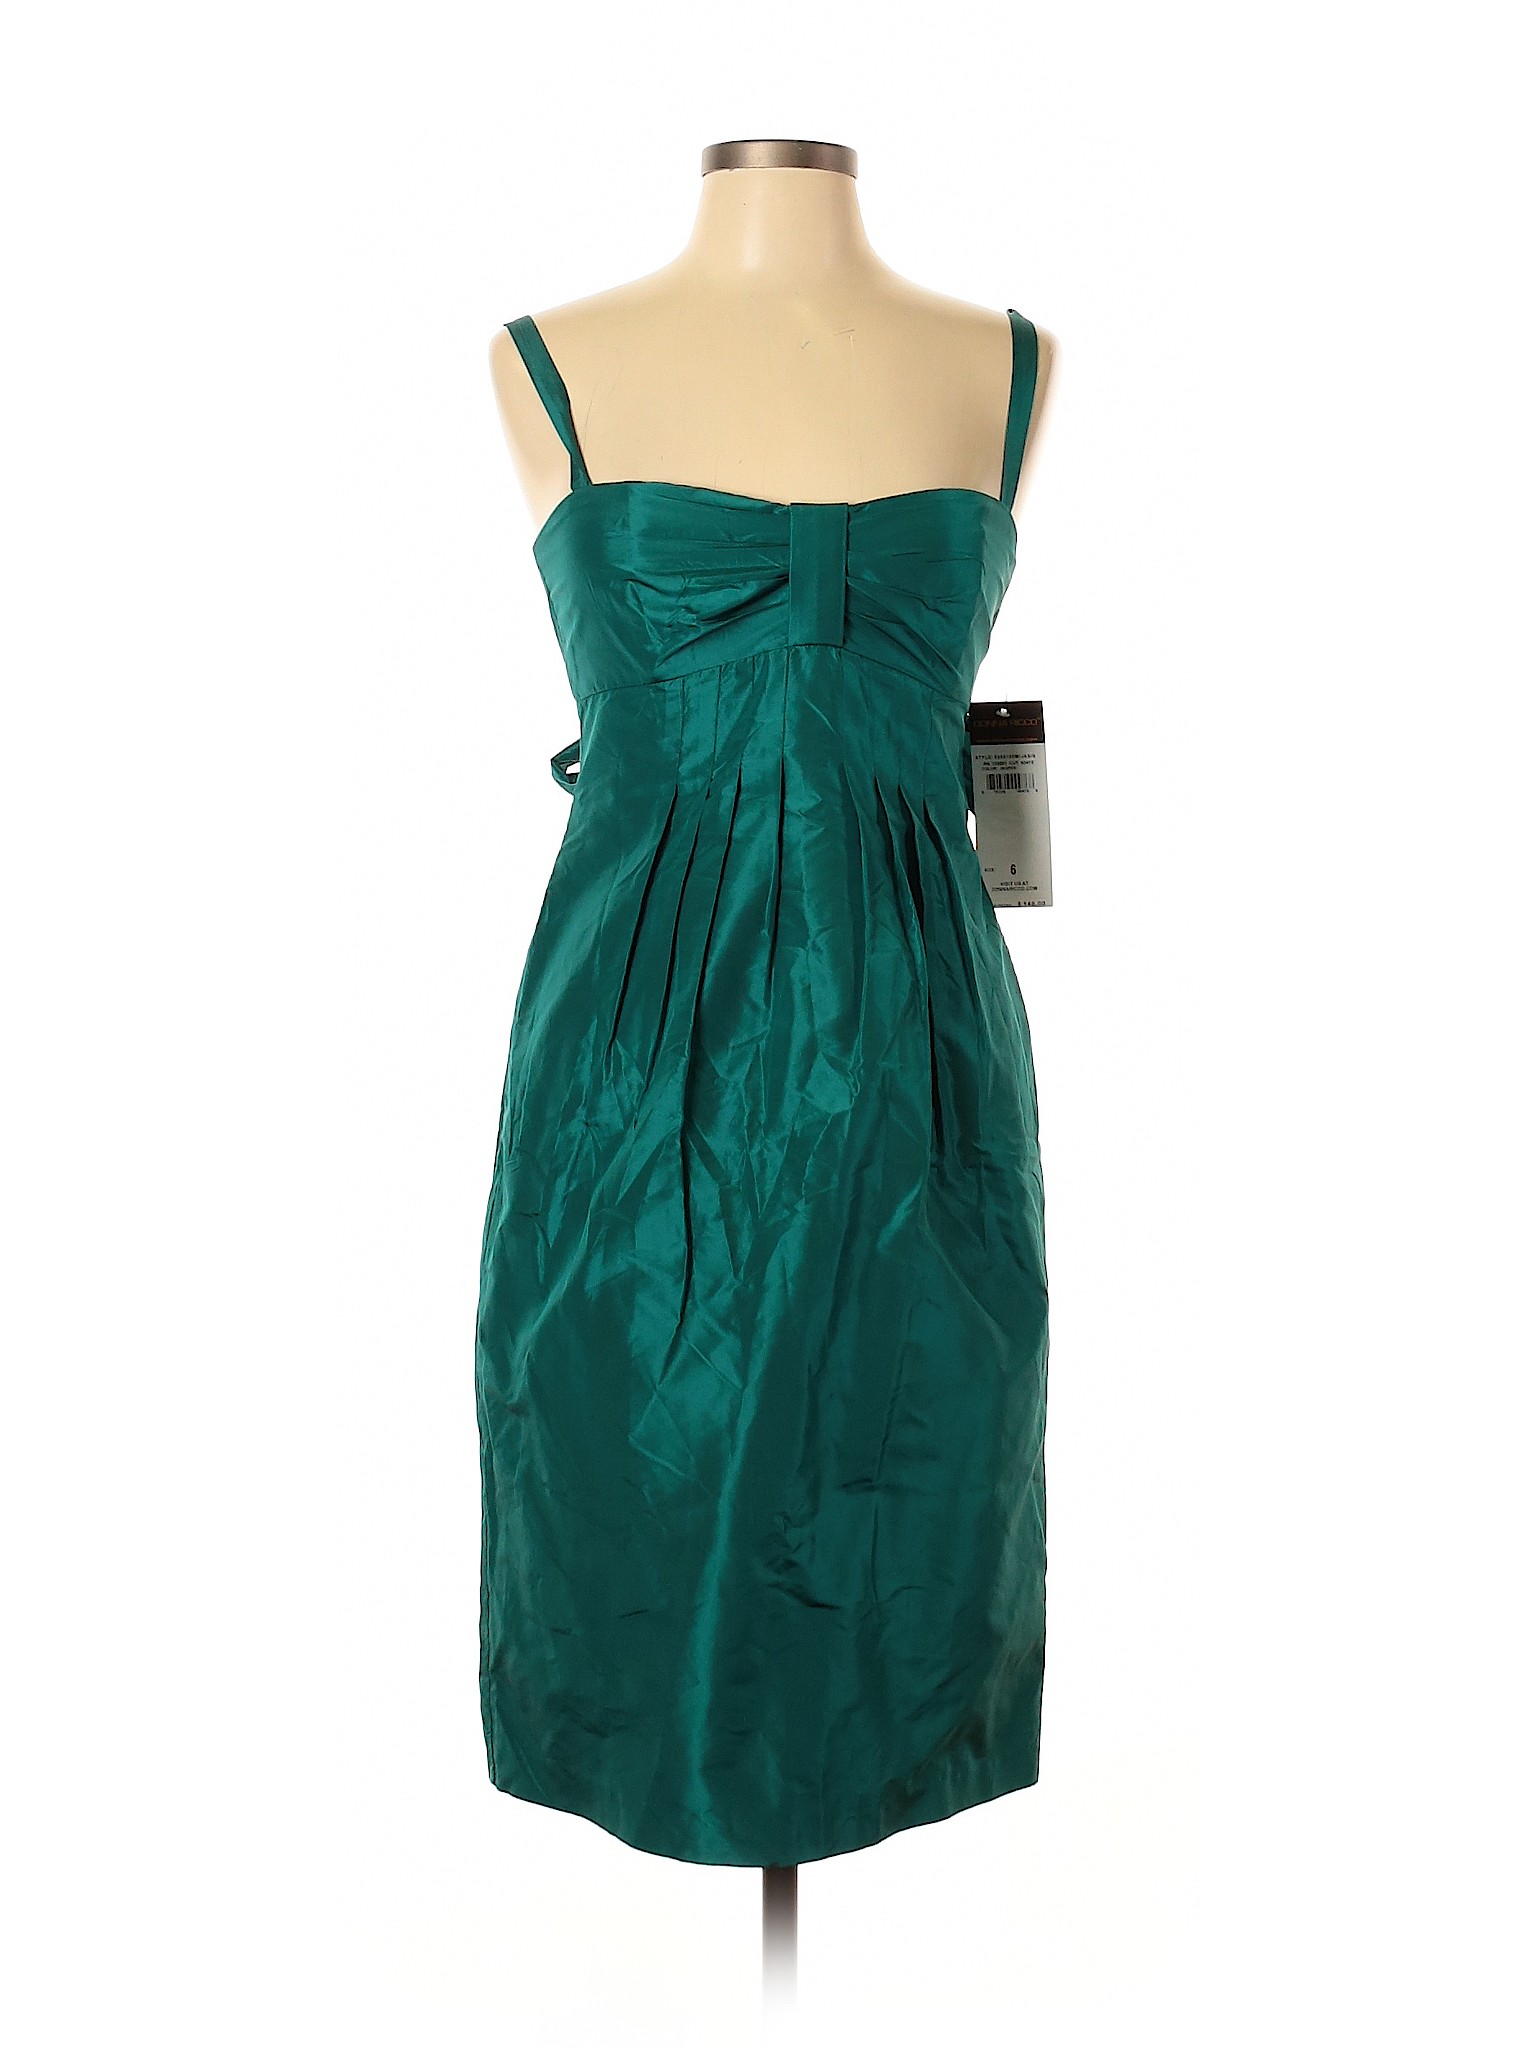 NWT Donna Ricco Women Green Cocktail Dress 6 | eBay